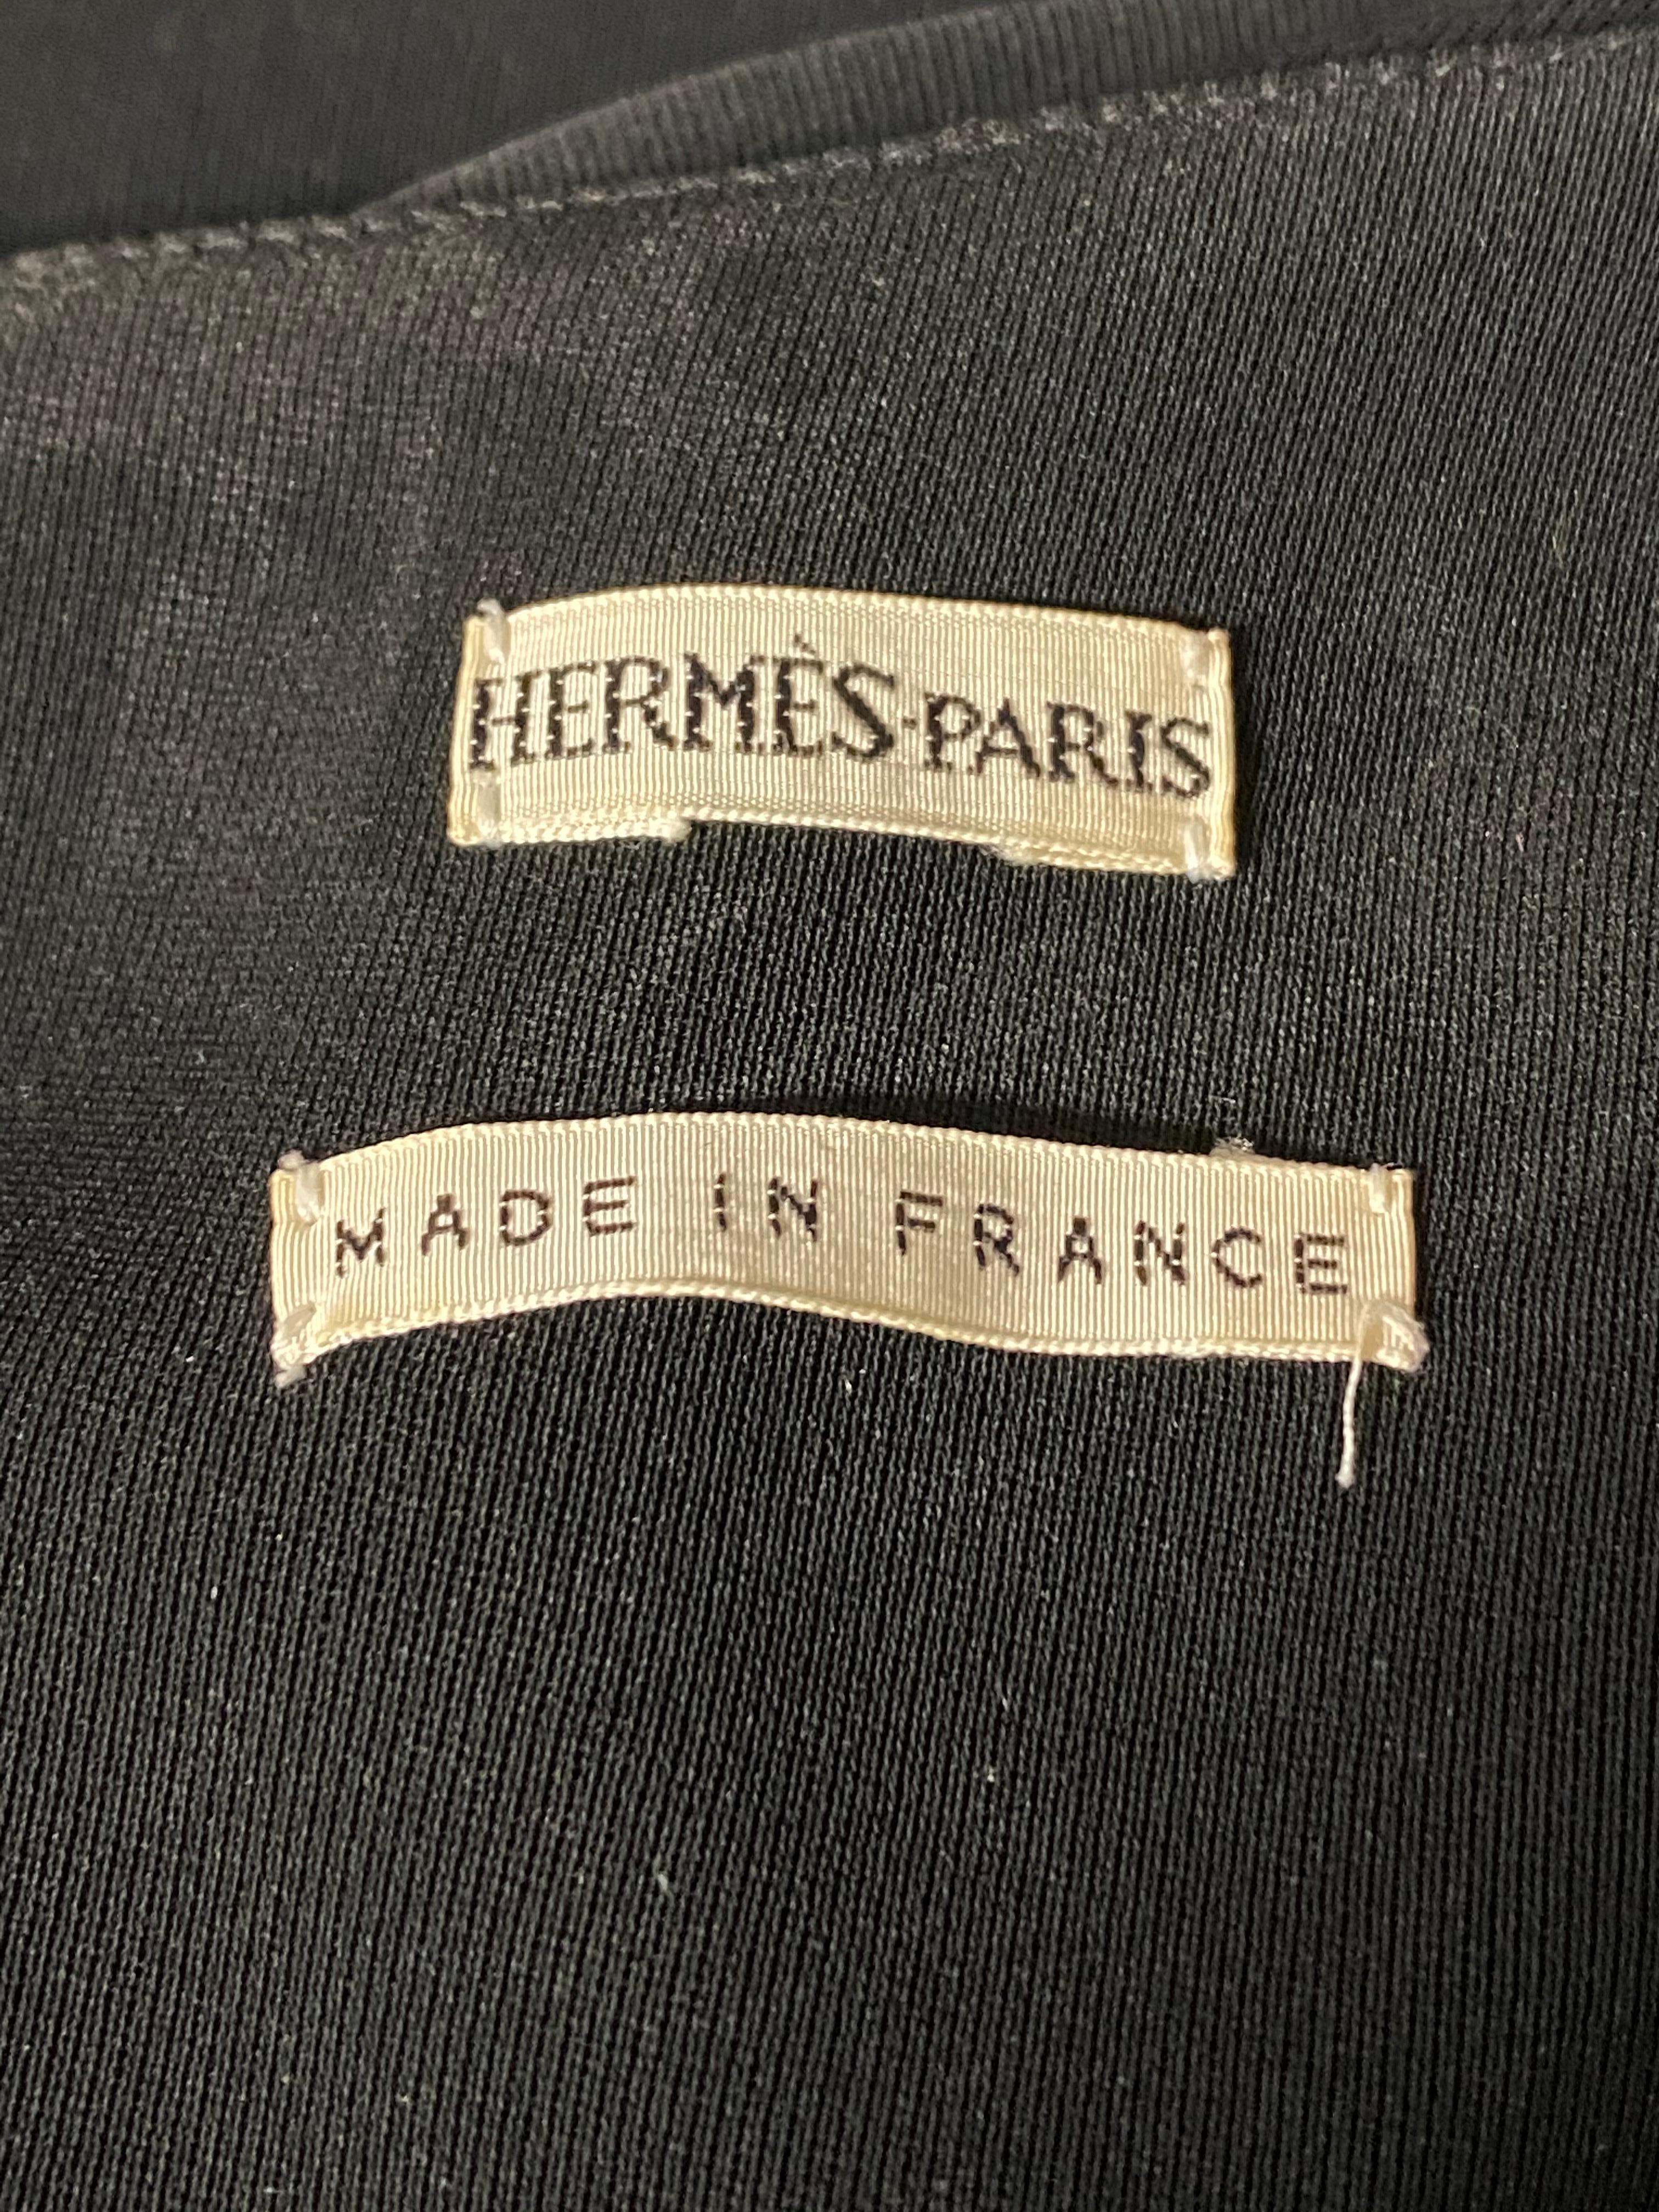 Vintage Hermes Paris Black, Size 36 For Sale 4